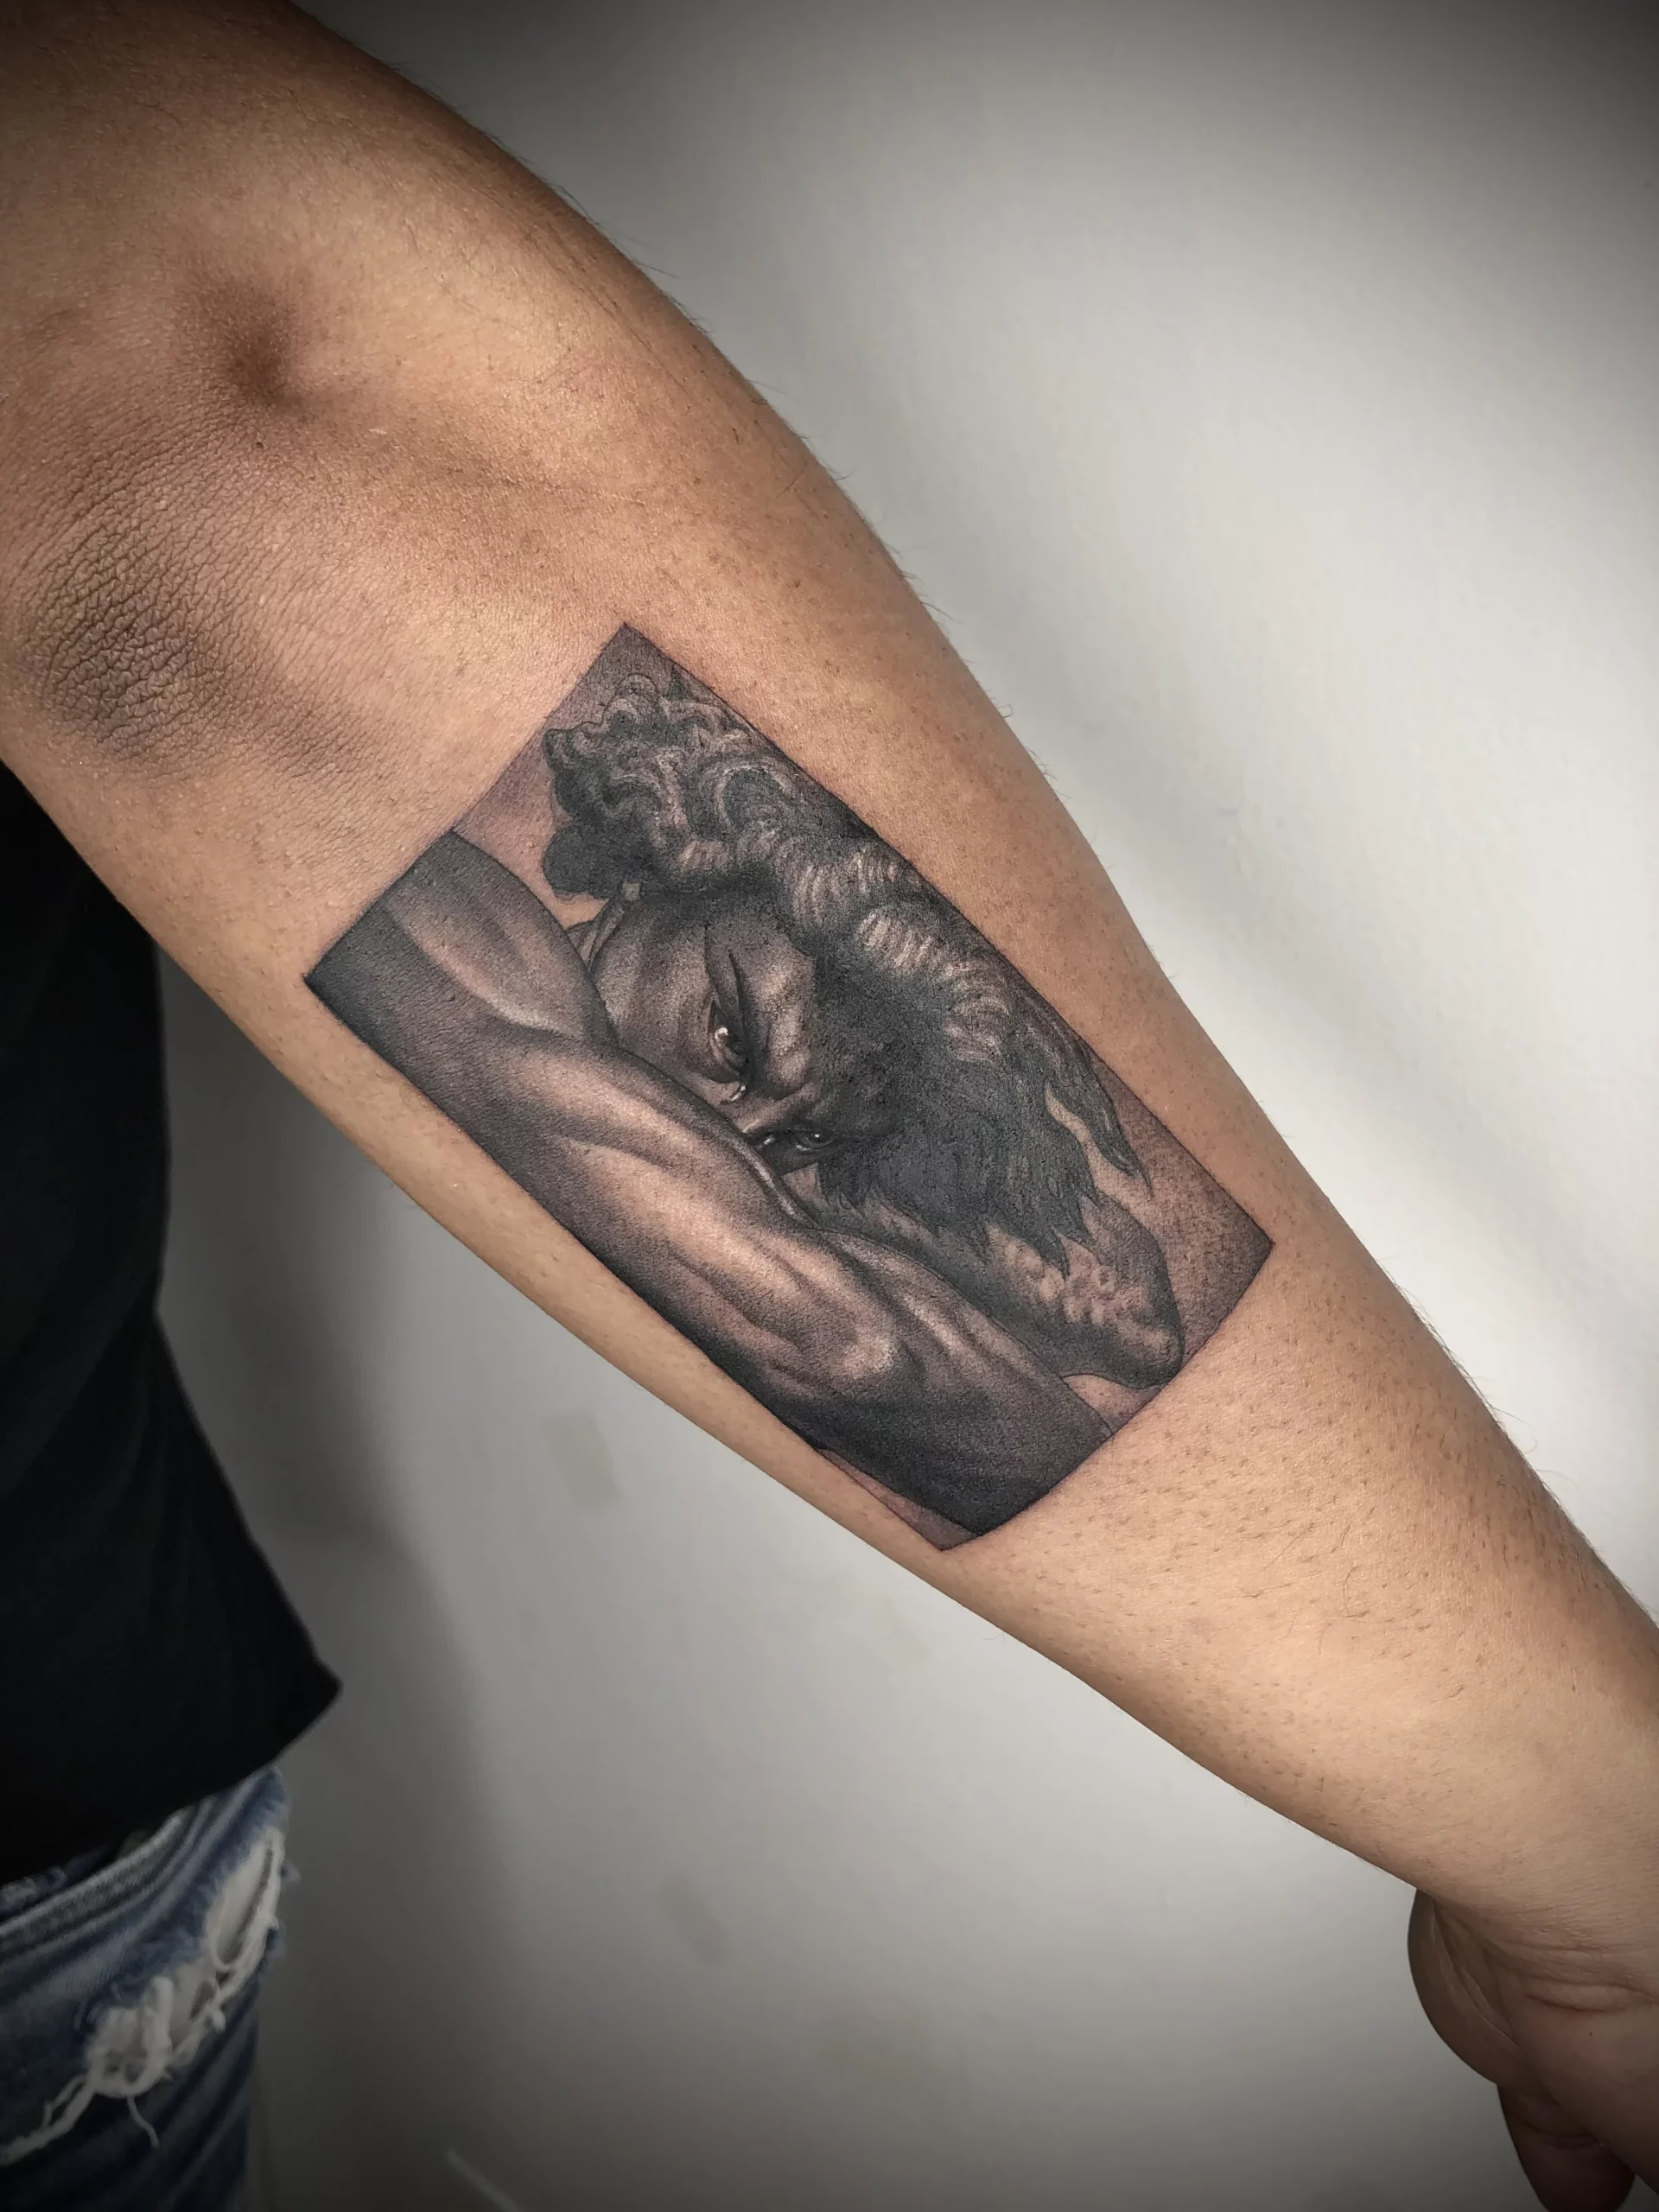 tatuaje angel caido realismo en brazo